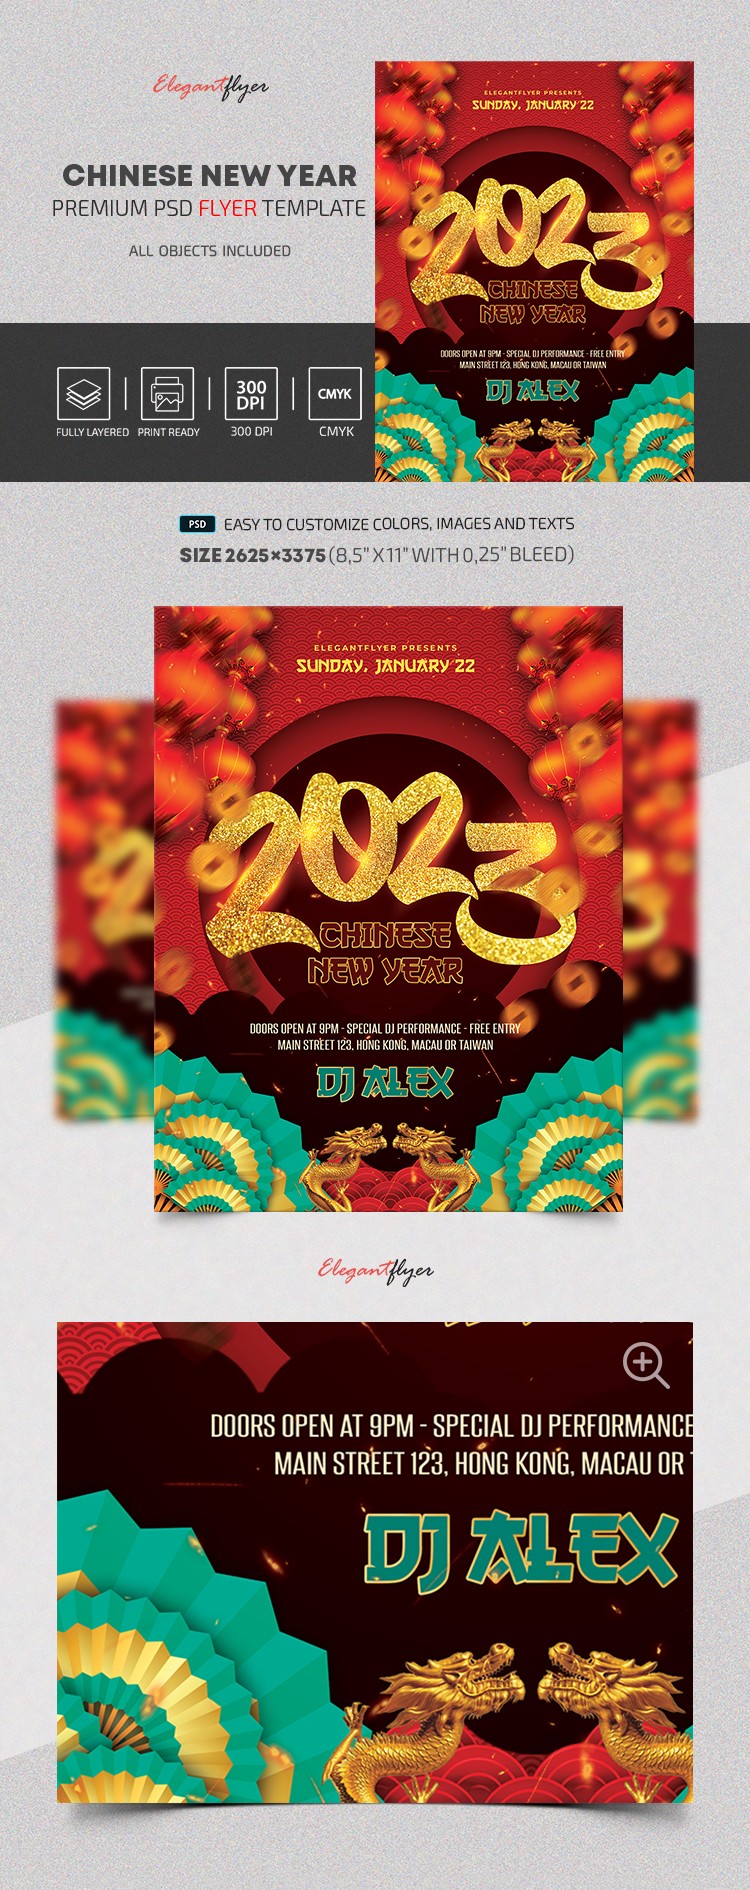 Chinese New Year Flyer by ElegantFlyer